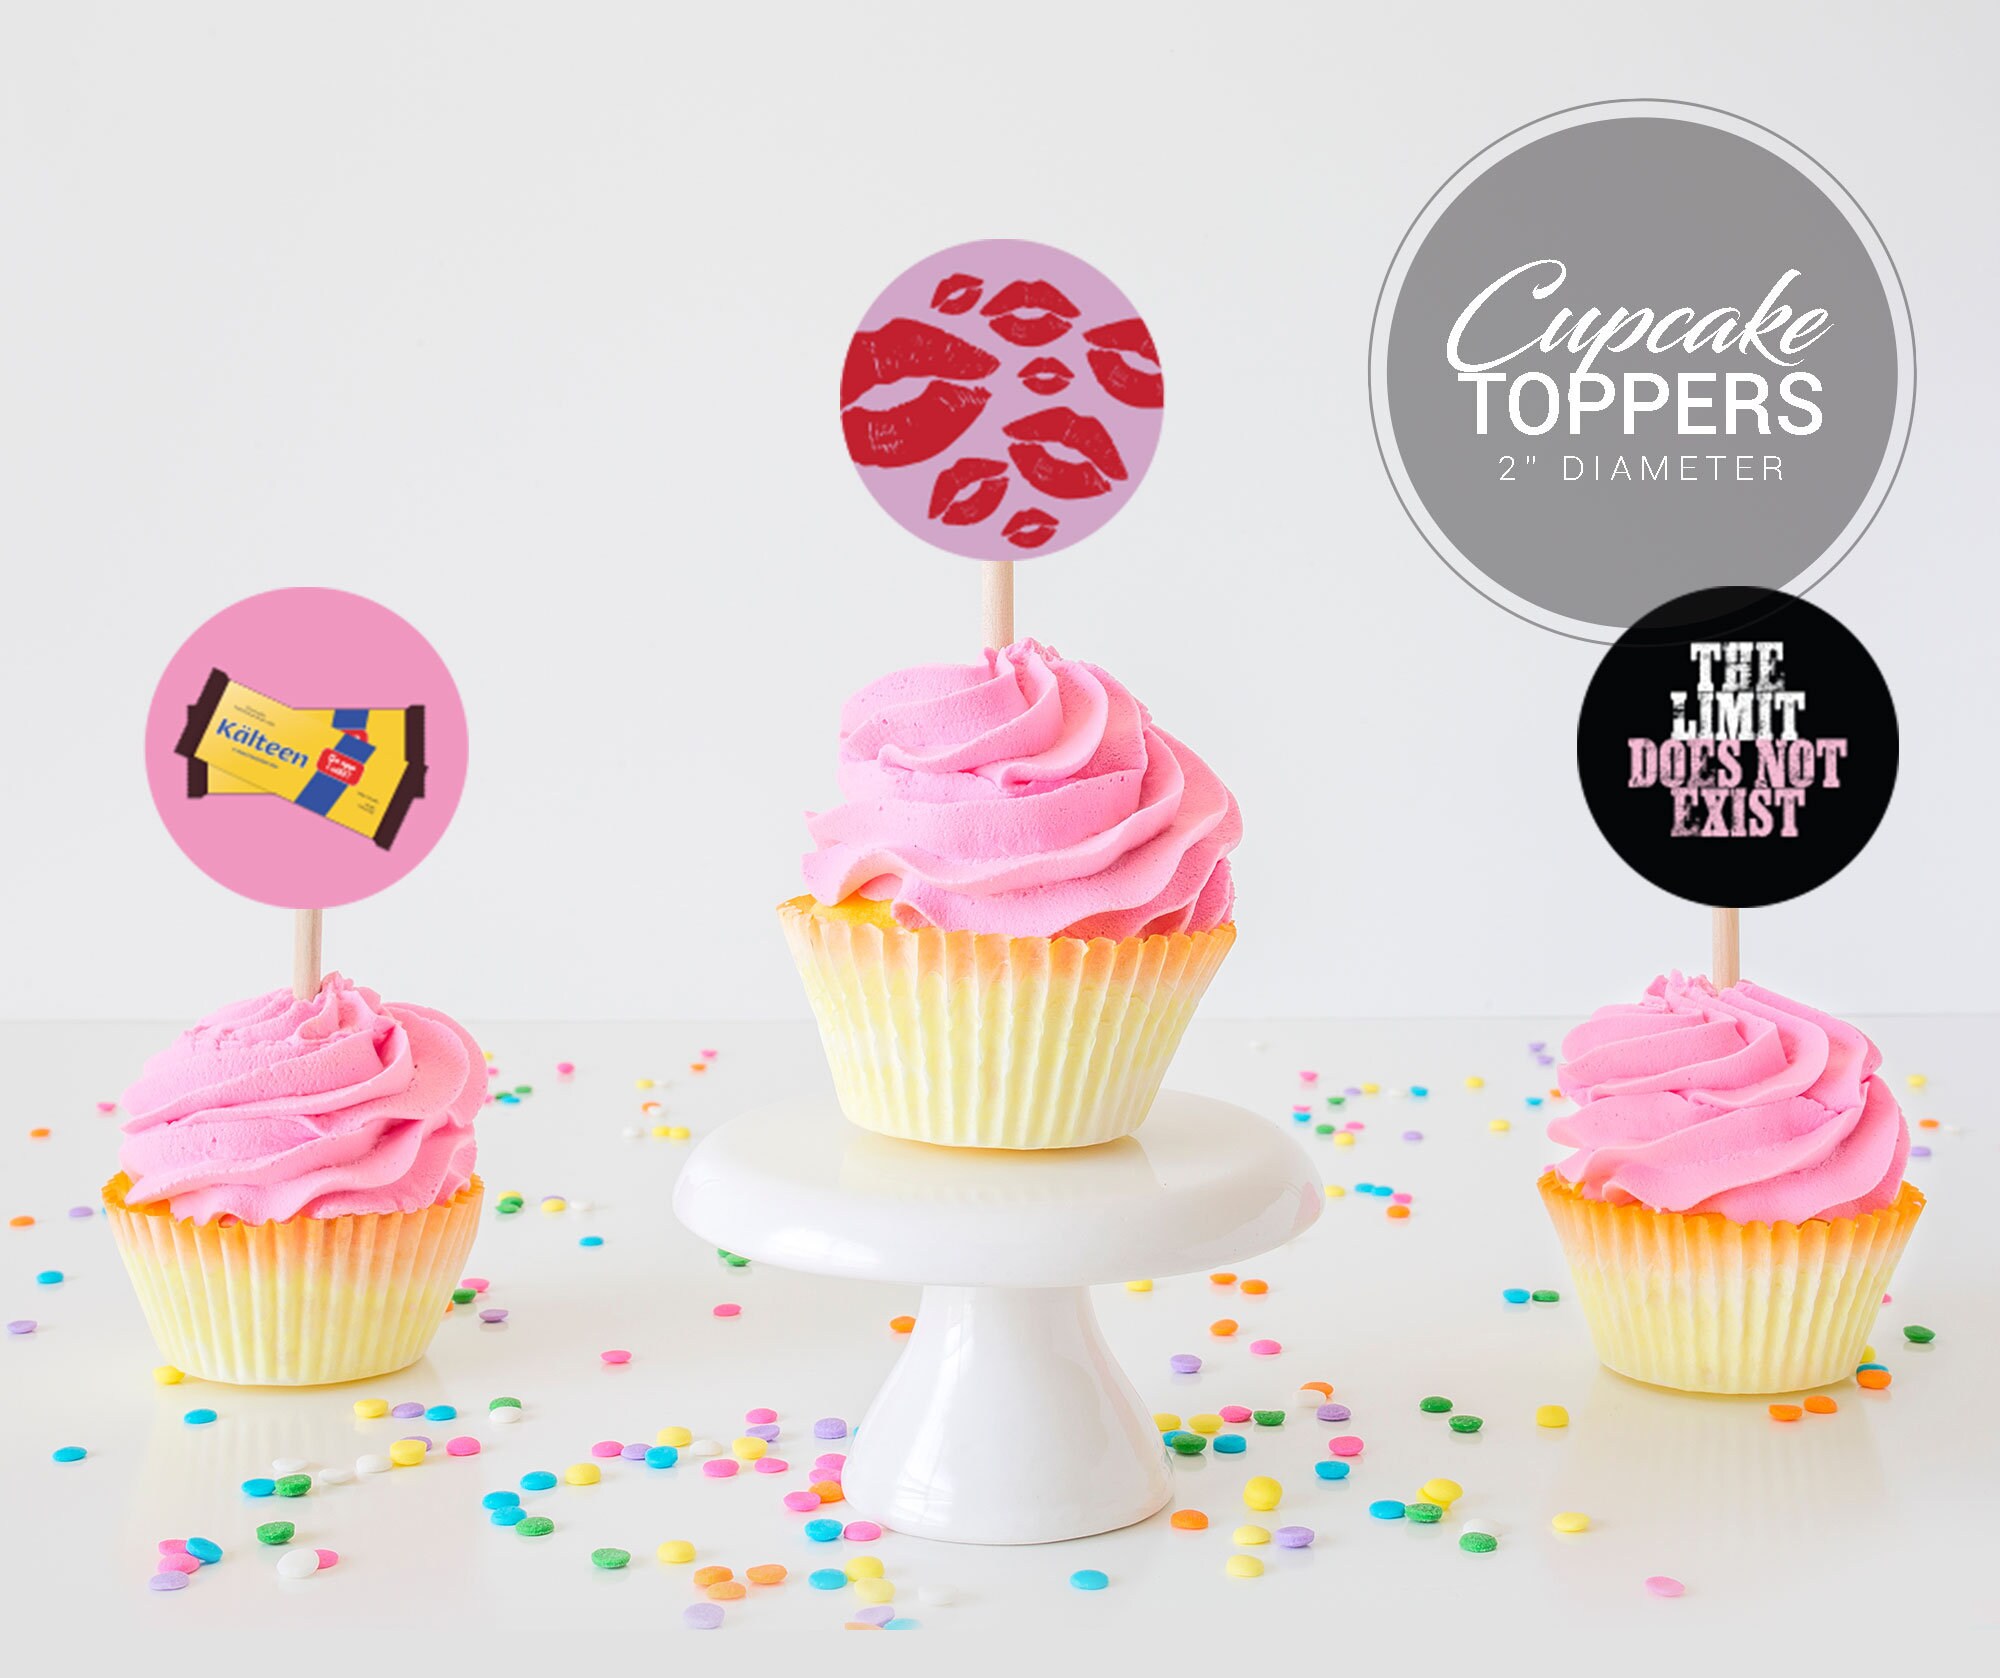 Mean girls theme cupcakes 💖💖 #trini #trinidad #fyp #trinifood